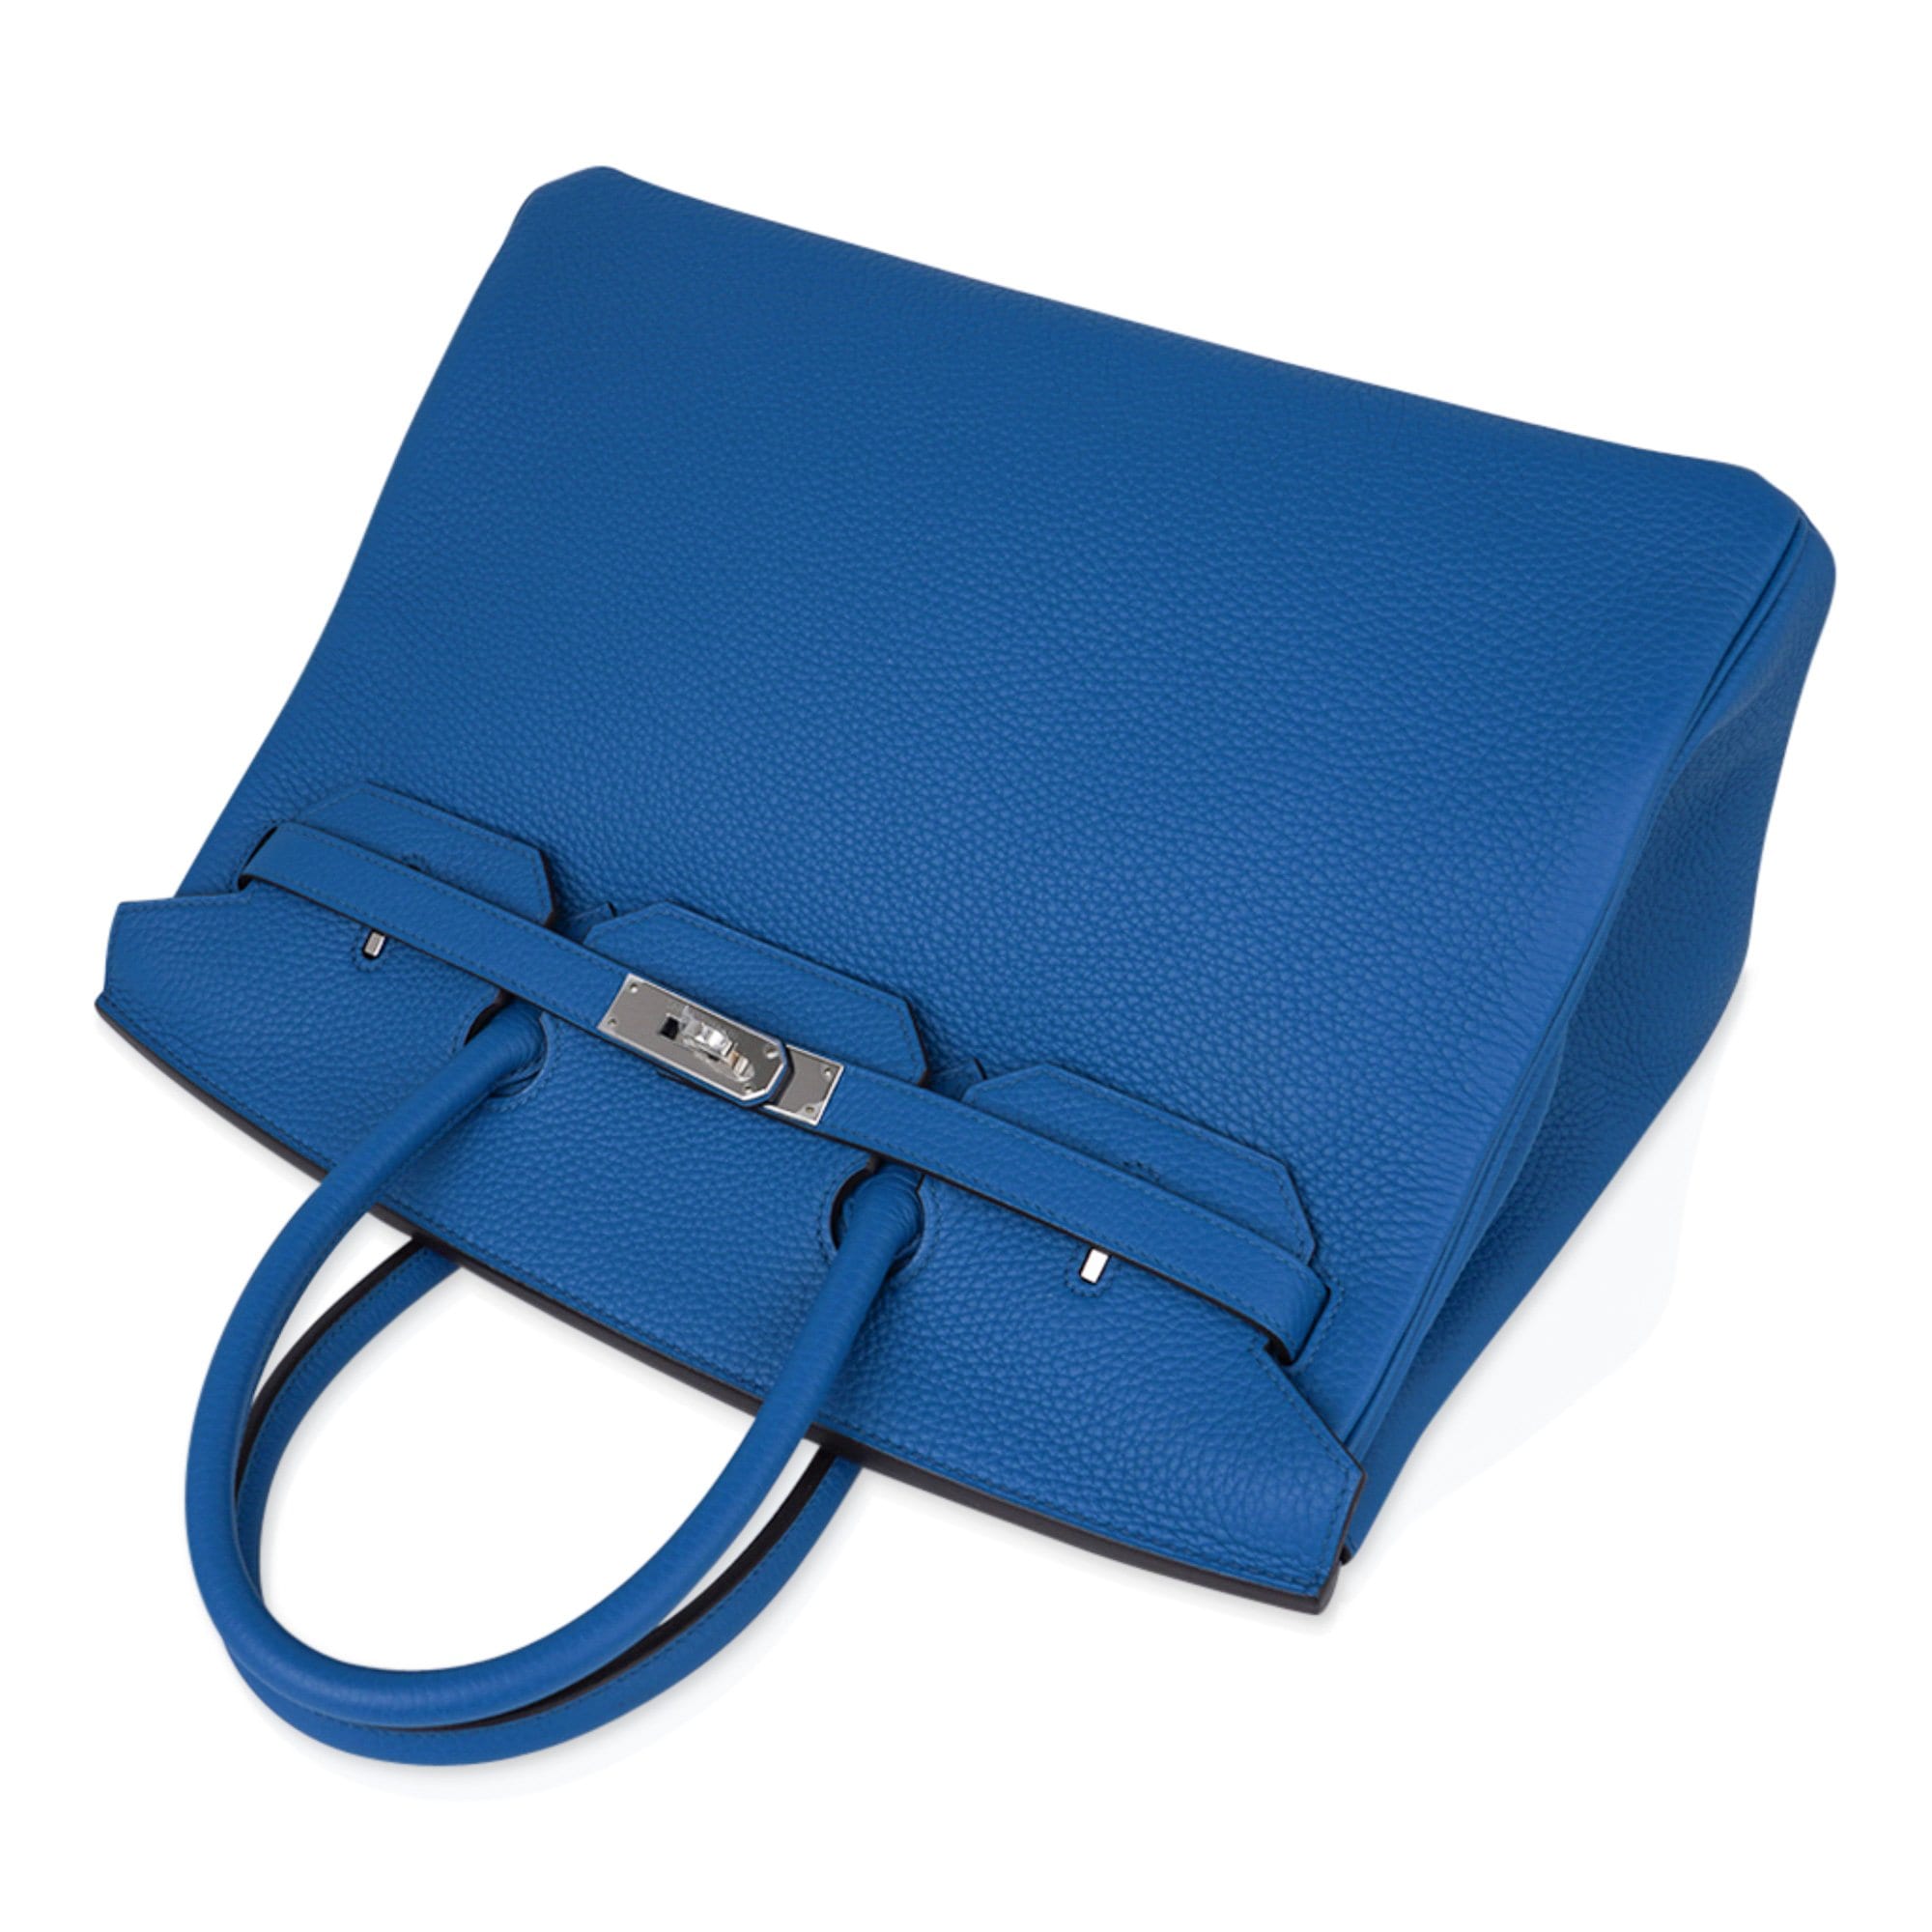 Hermes Birkin 35 N stamp $12999 Details: Stunning Jean blue colour